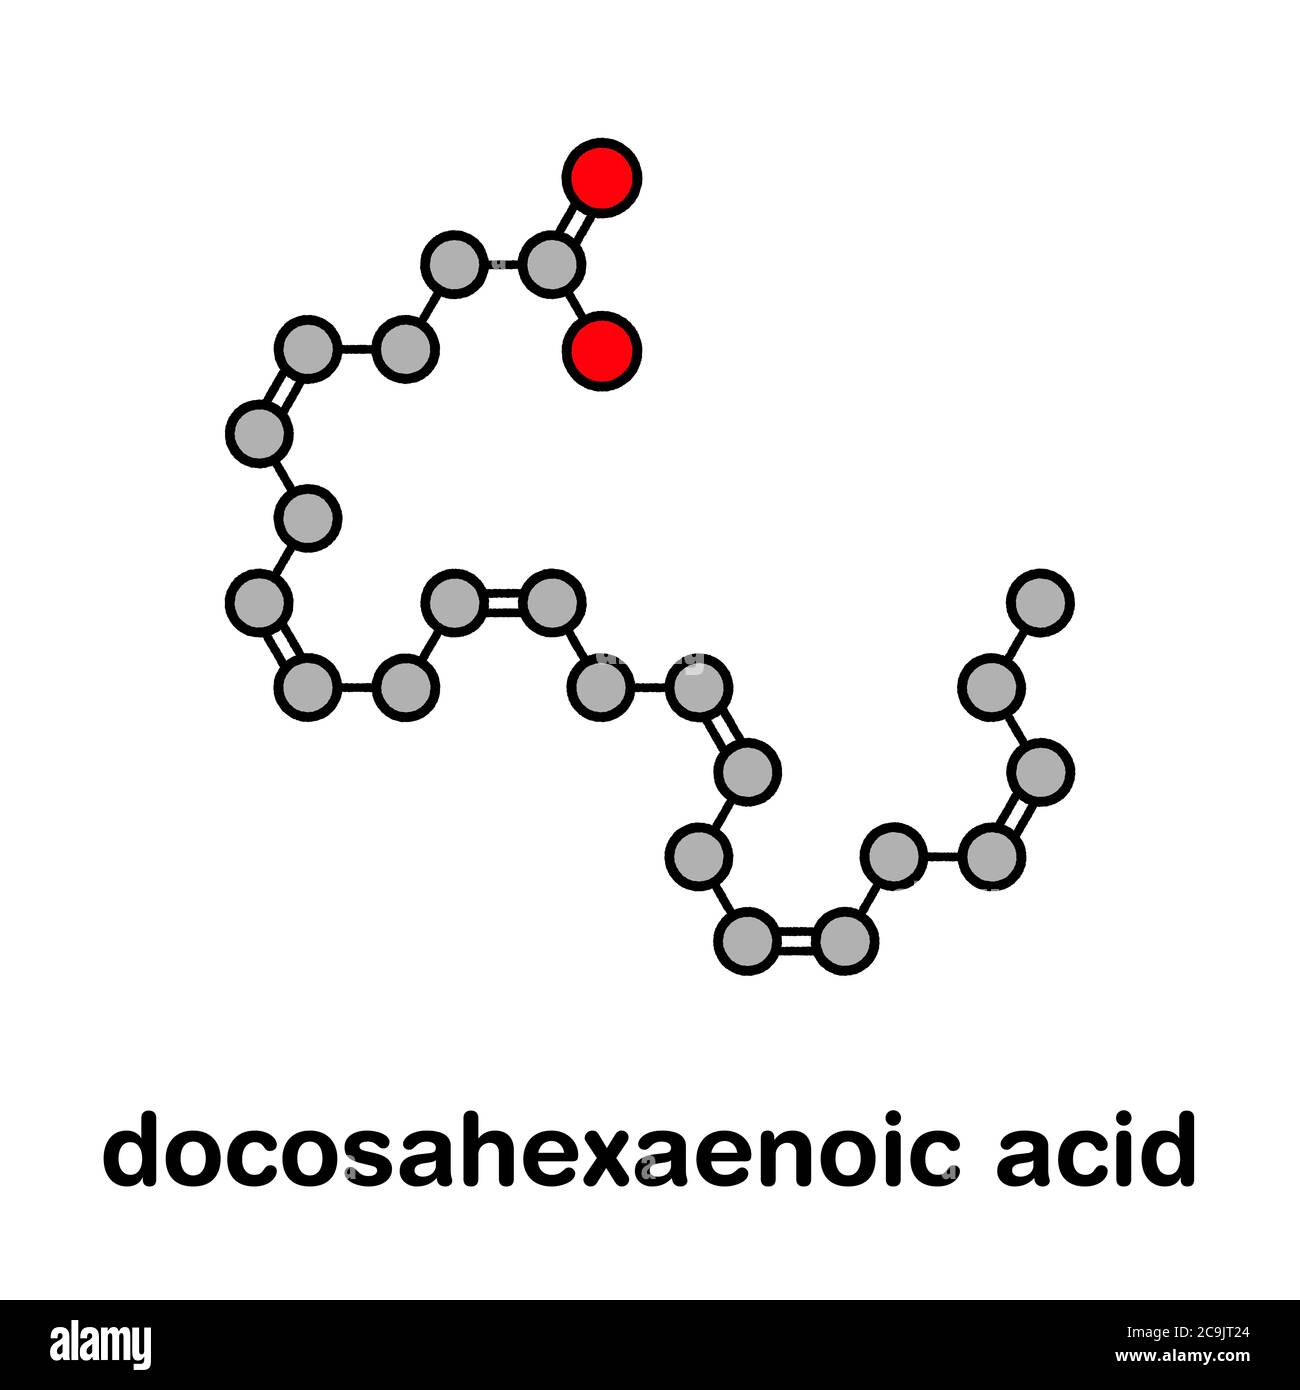 Docosahexaenoic acid (DHA, cervonic acid) molecule. Polyunsaturated omega-3 fatty acid present in fish oil. Stylized skeletal formula (chemical struct Stock Photo